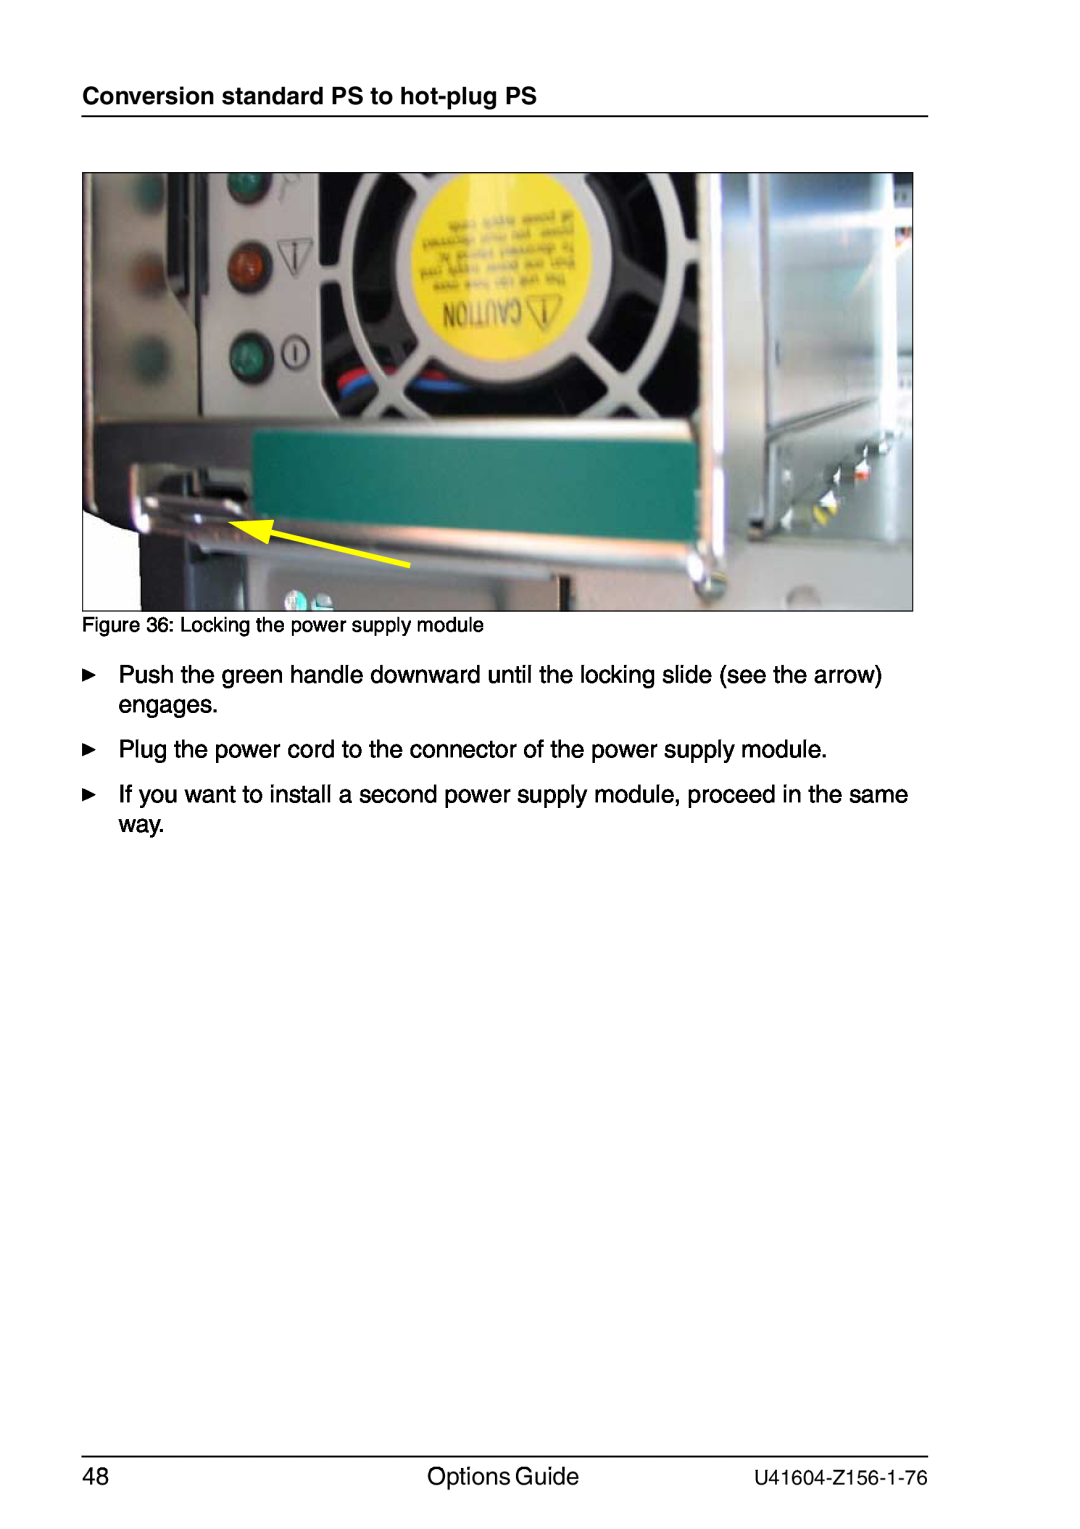 Fujitsu TX150 S3 manual Conversion standard PS to hot-plug PS, Locking the power supply module 